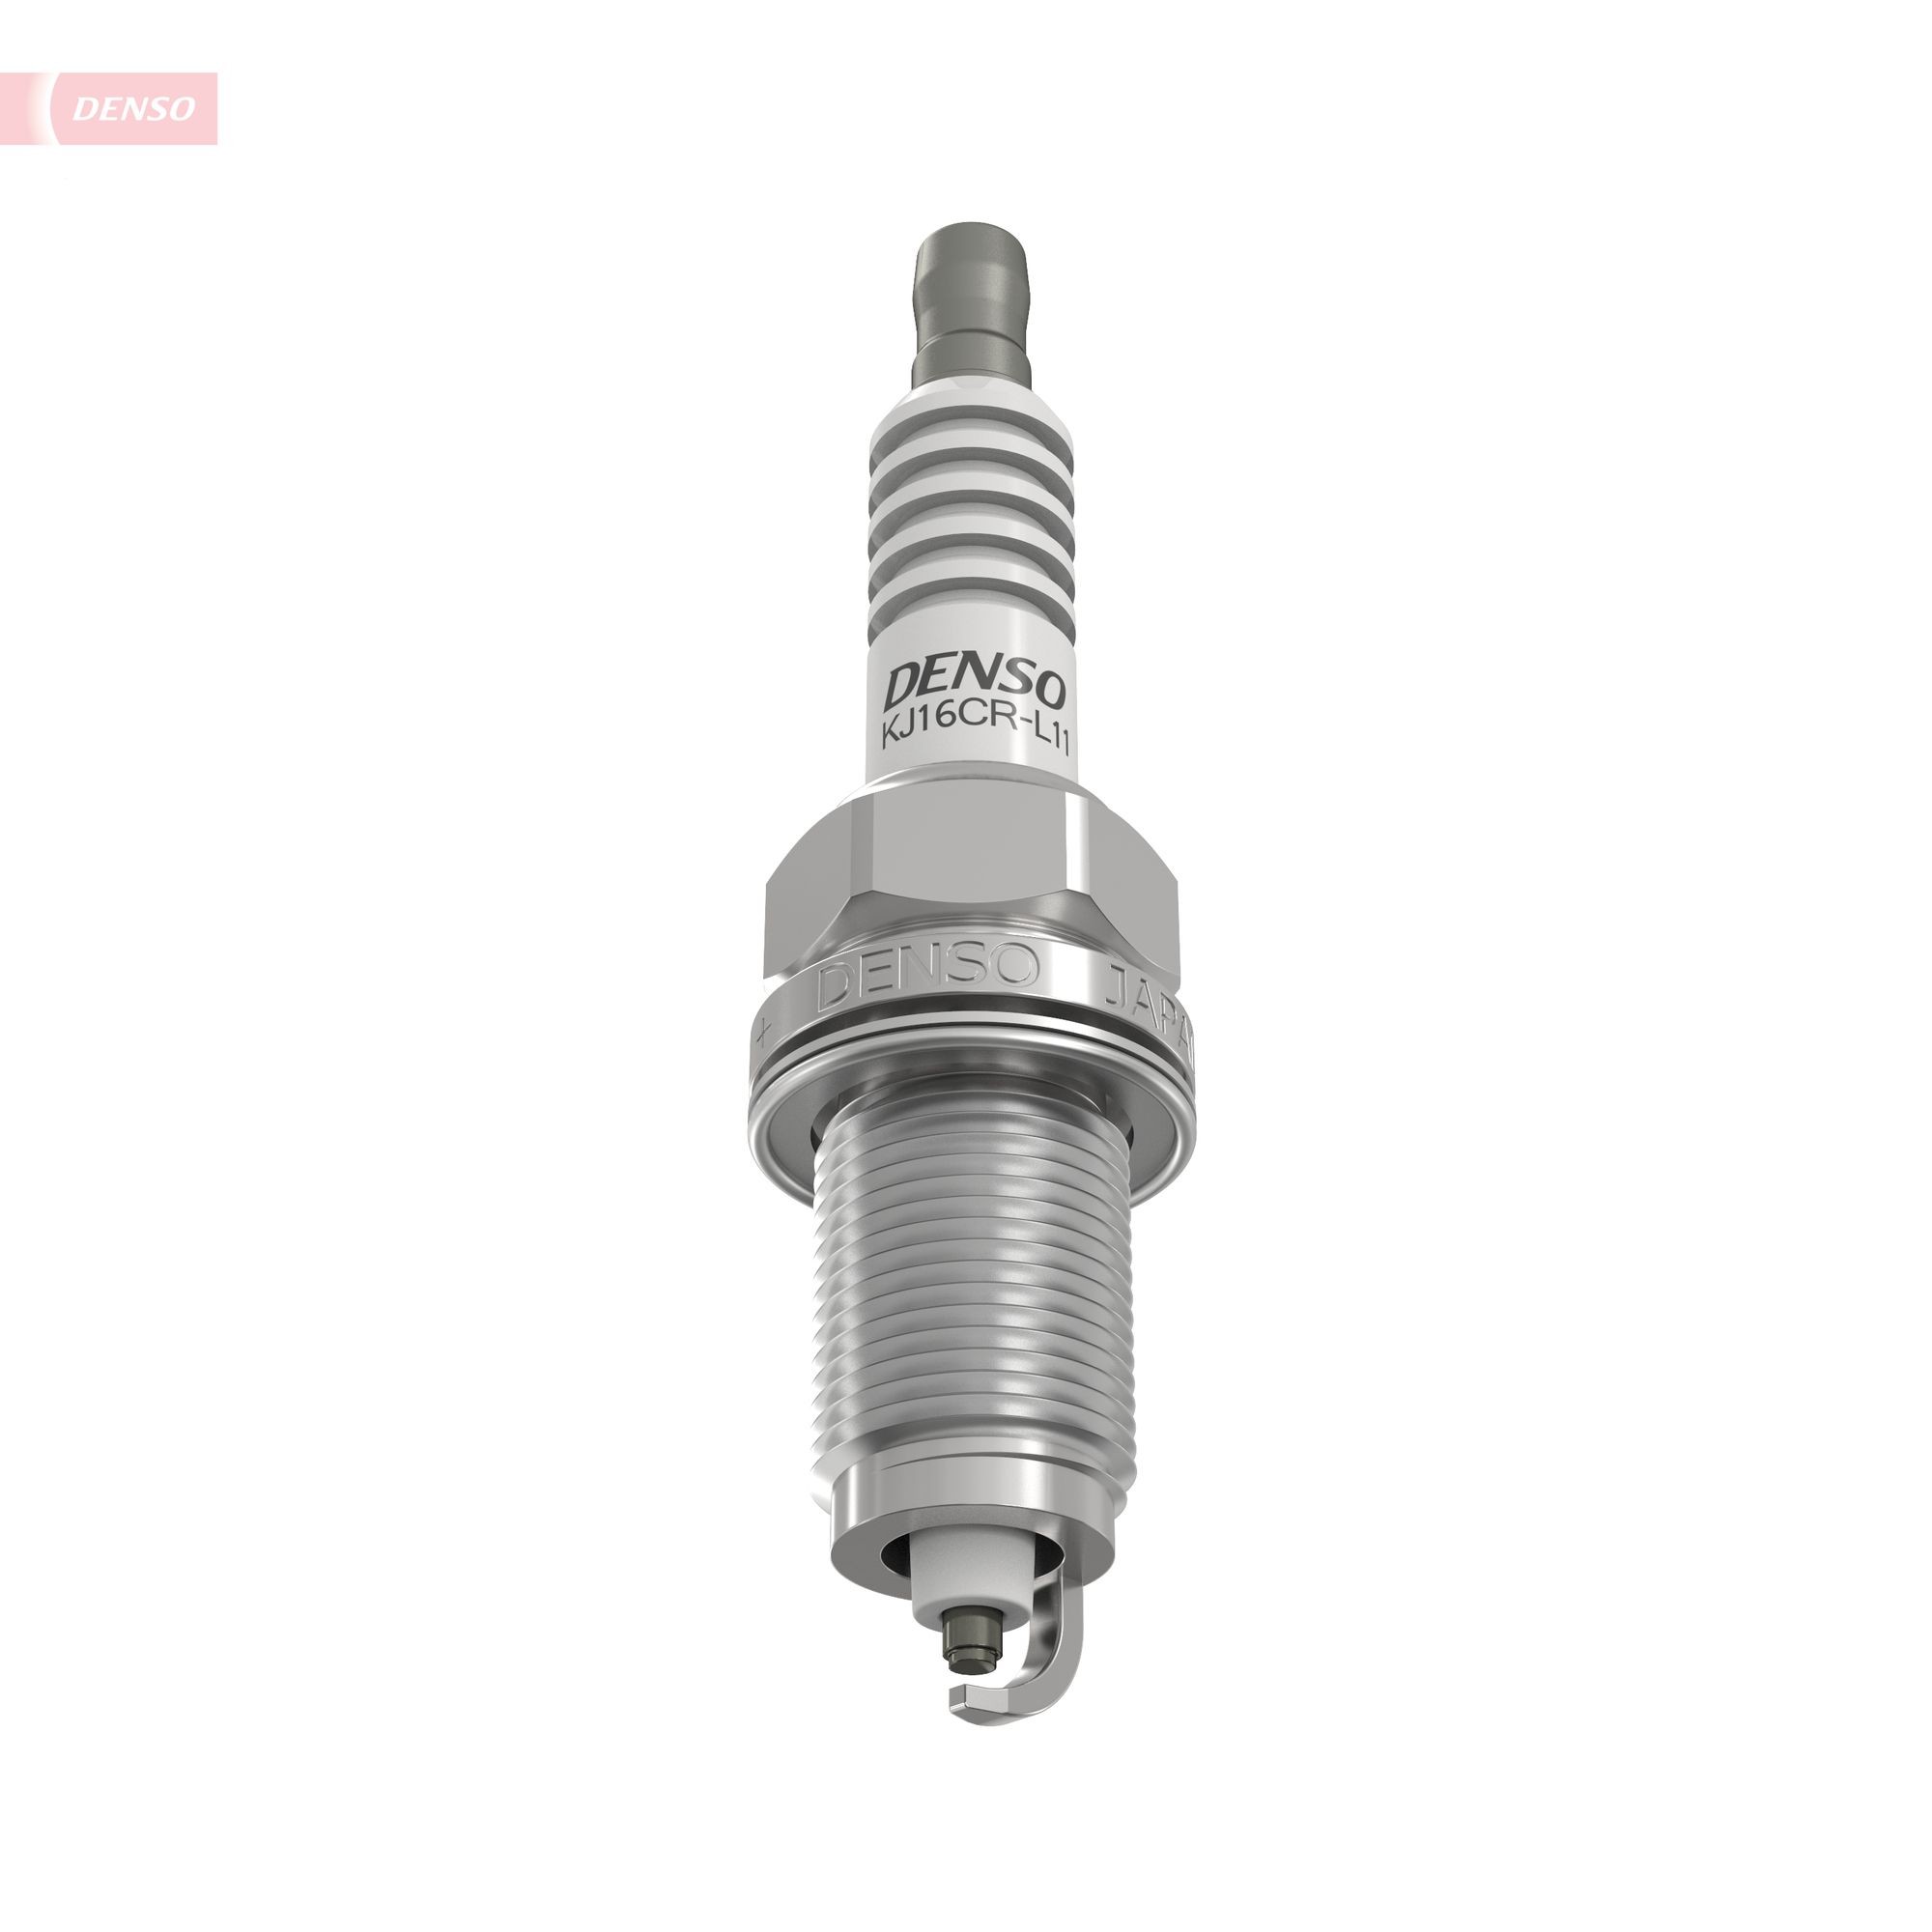 KJ16CR-L11 Spark plugs 3132 DENSO Spanner Size: 16